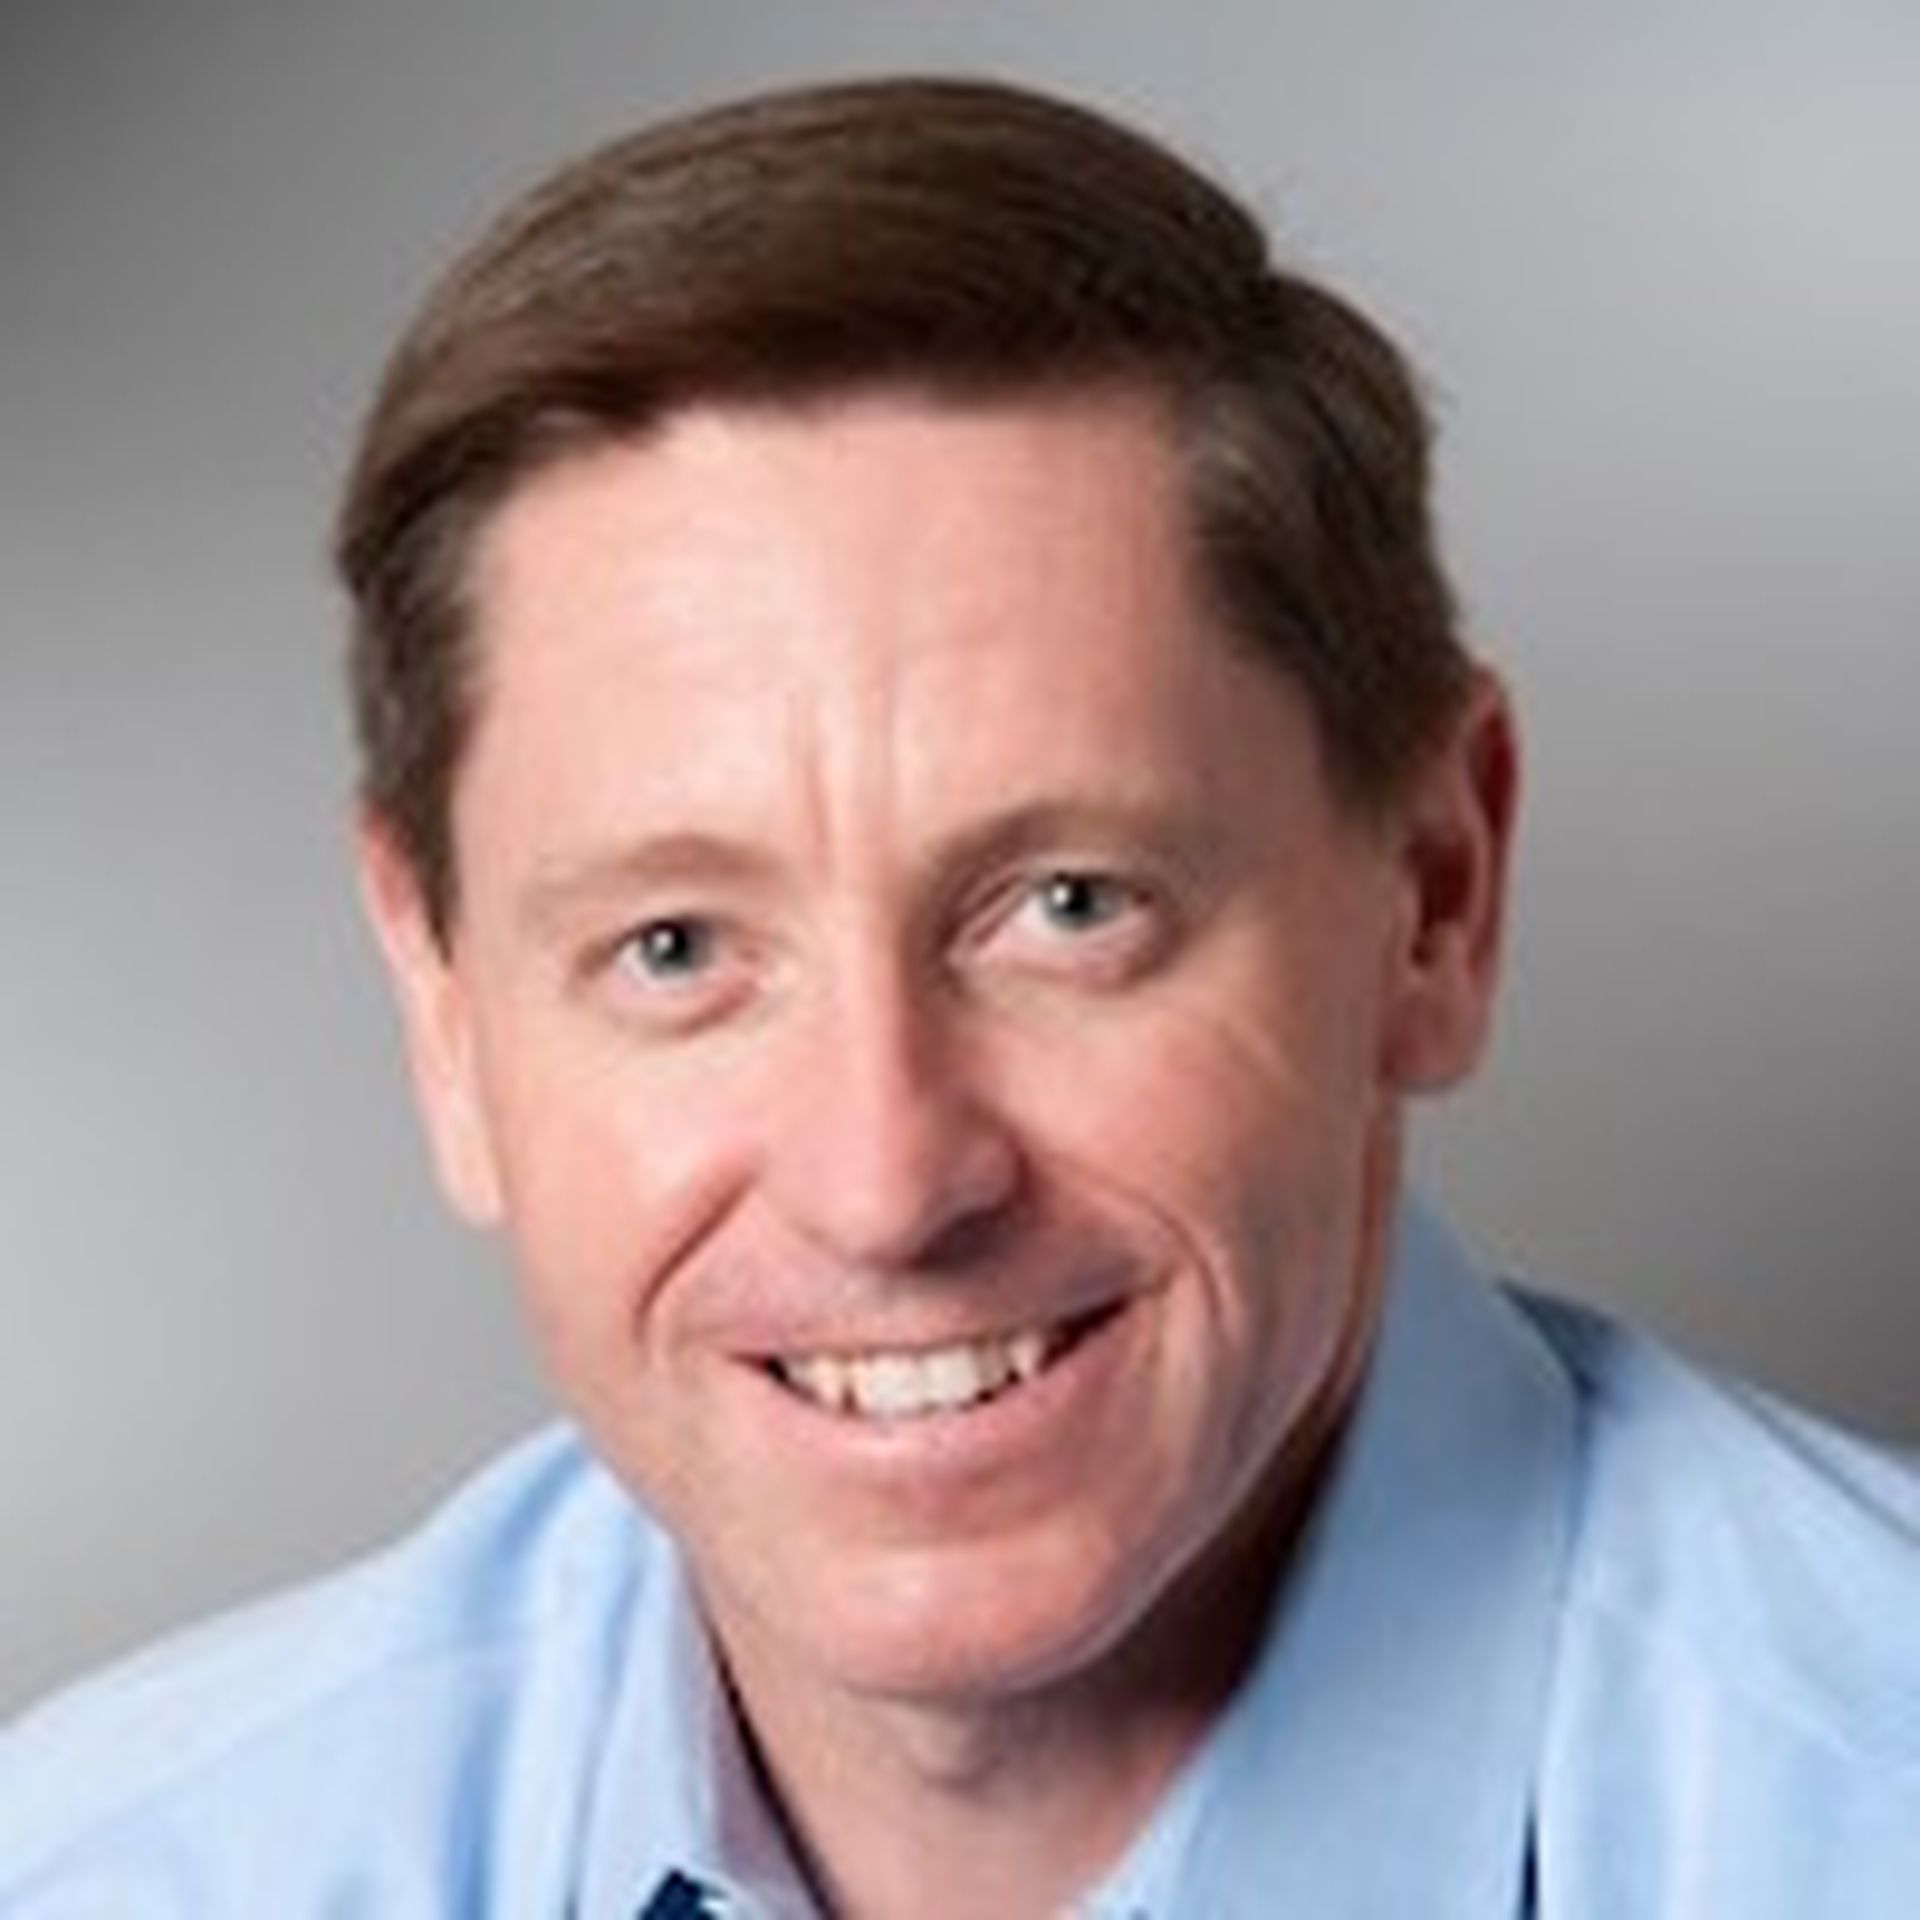 Former Palo Alto Networks CEO Mark McLaughlin